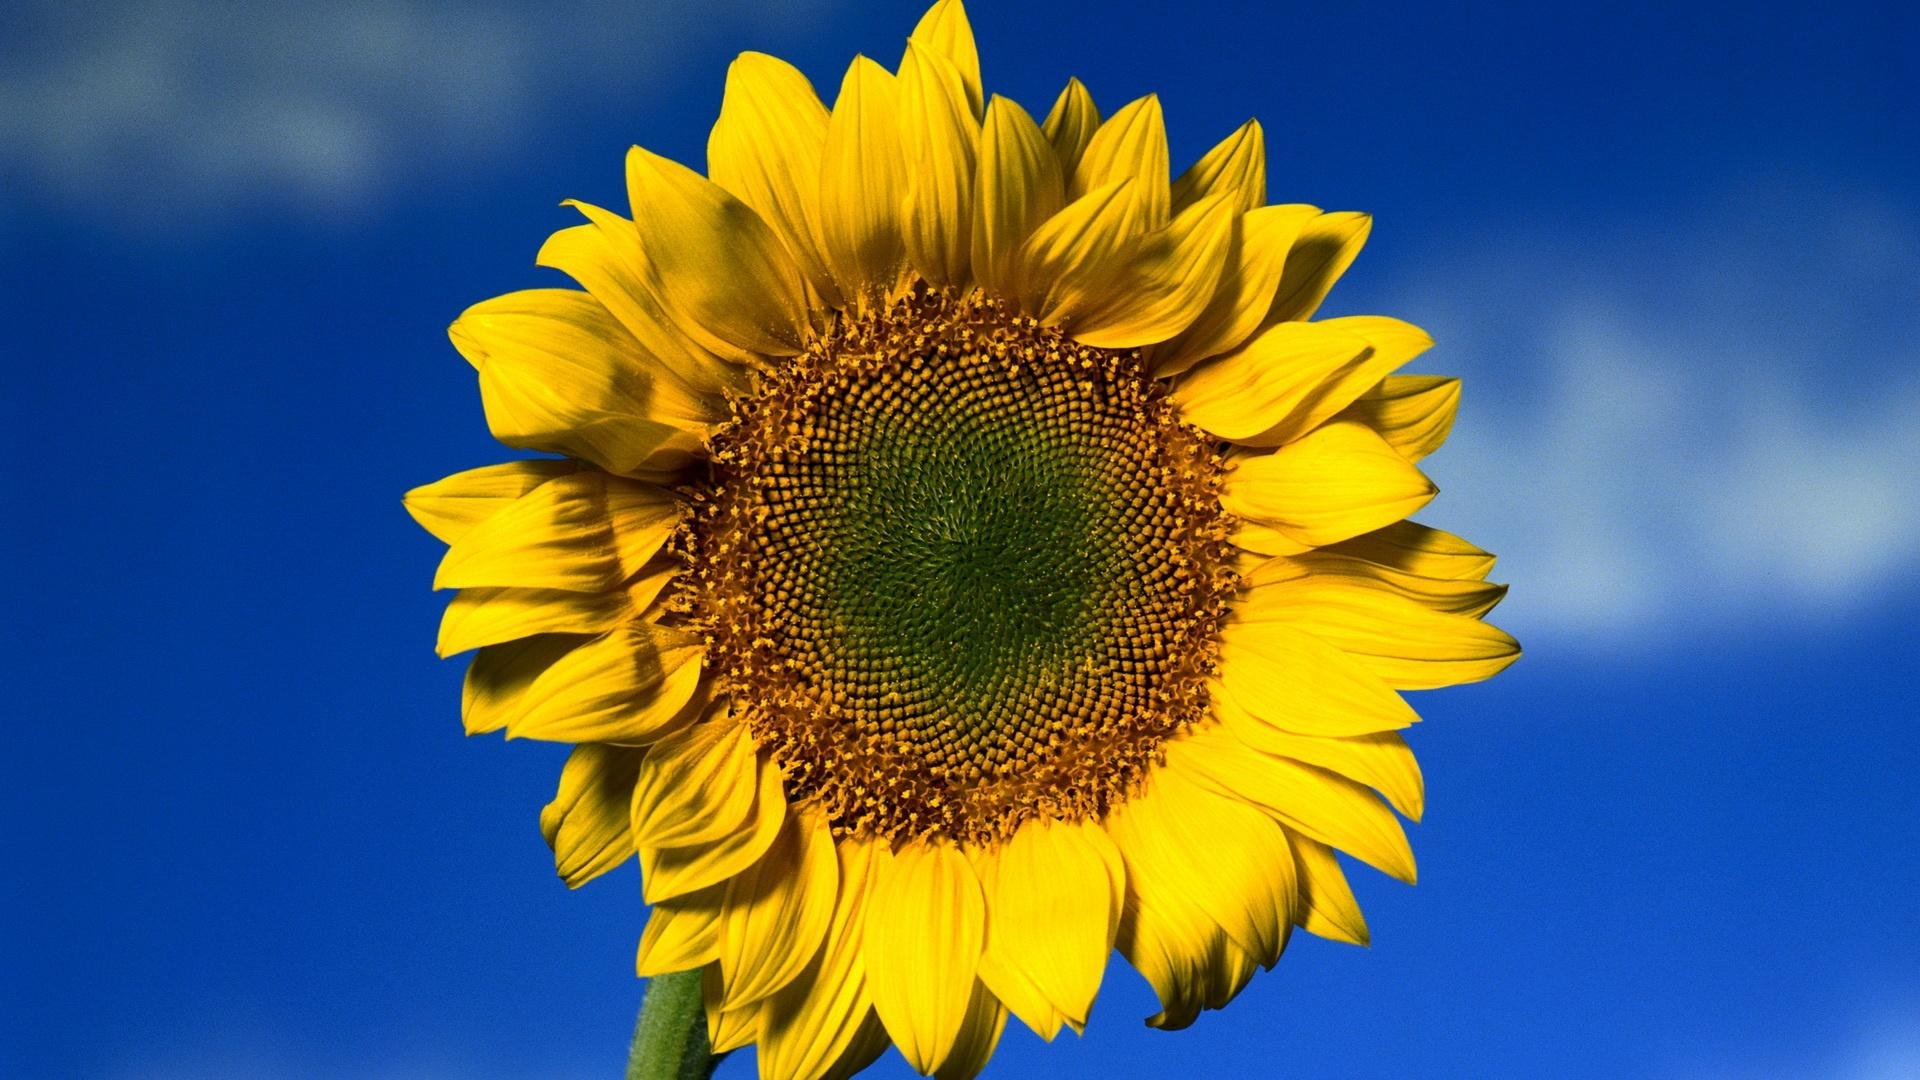 Download full hd Sunflower desktop background ID:226306 for free